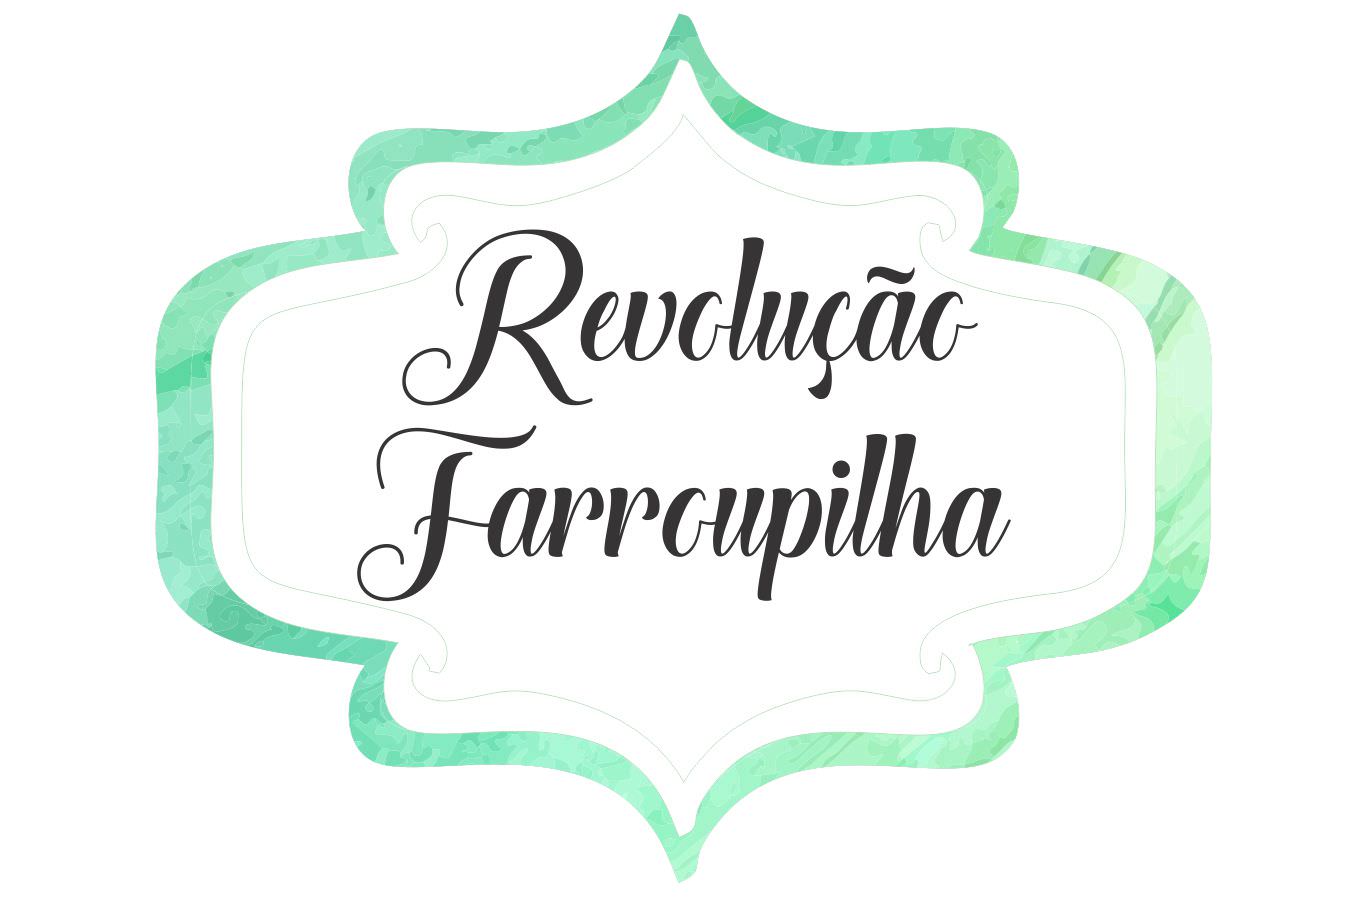 Revoluo Farroupilha - Resumo